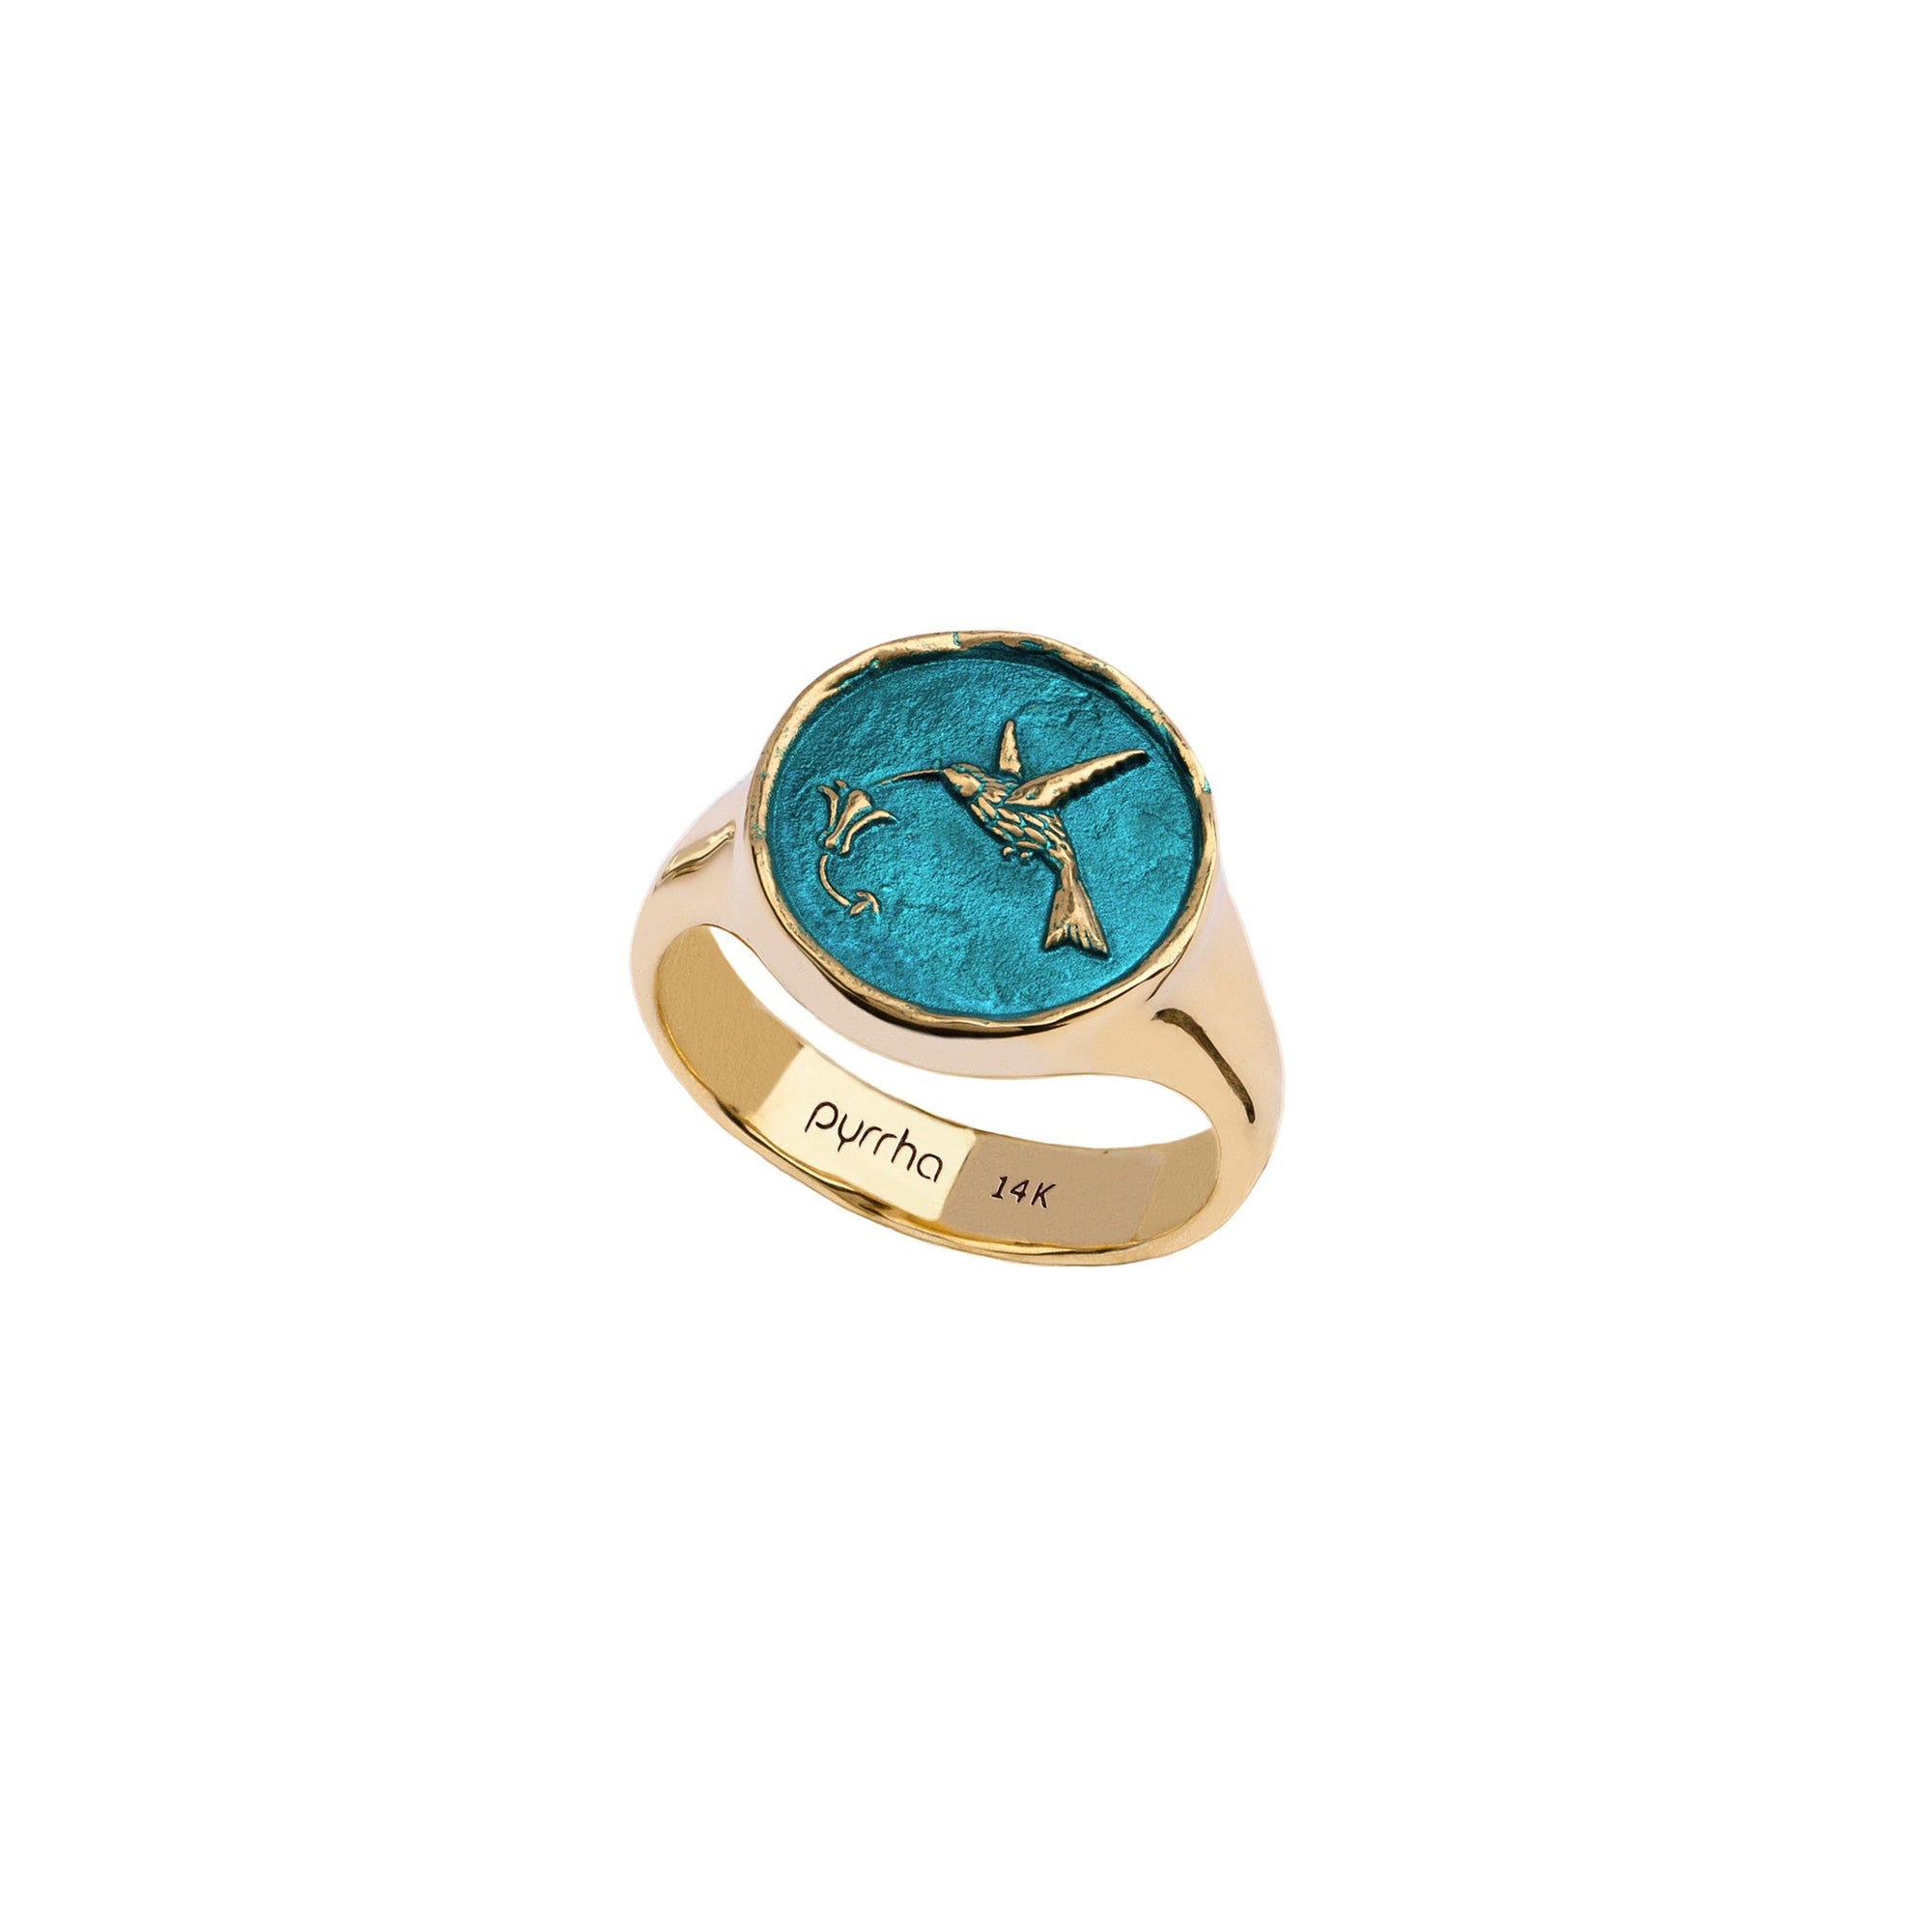 Hummingbird 14K Gold Signet Ring - True Colors